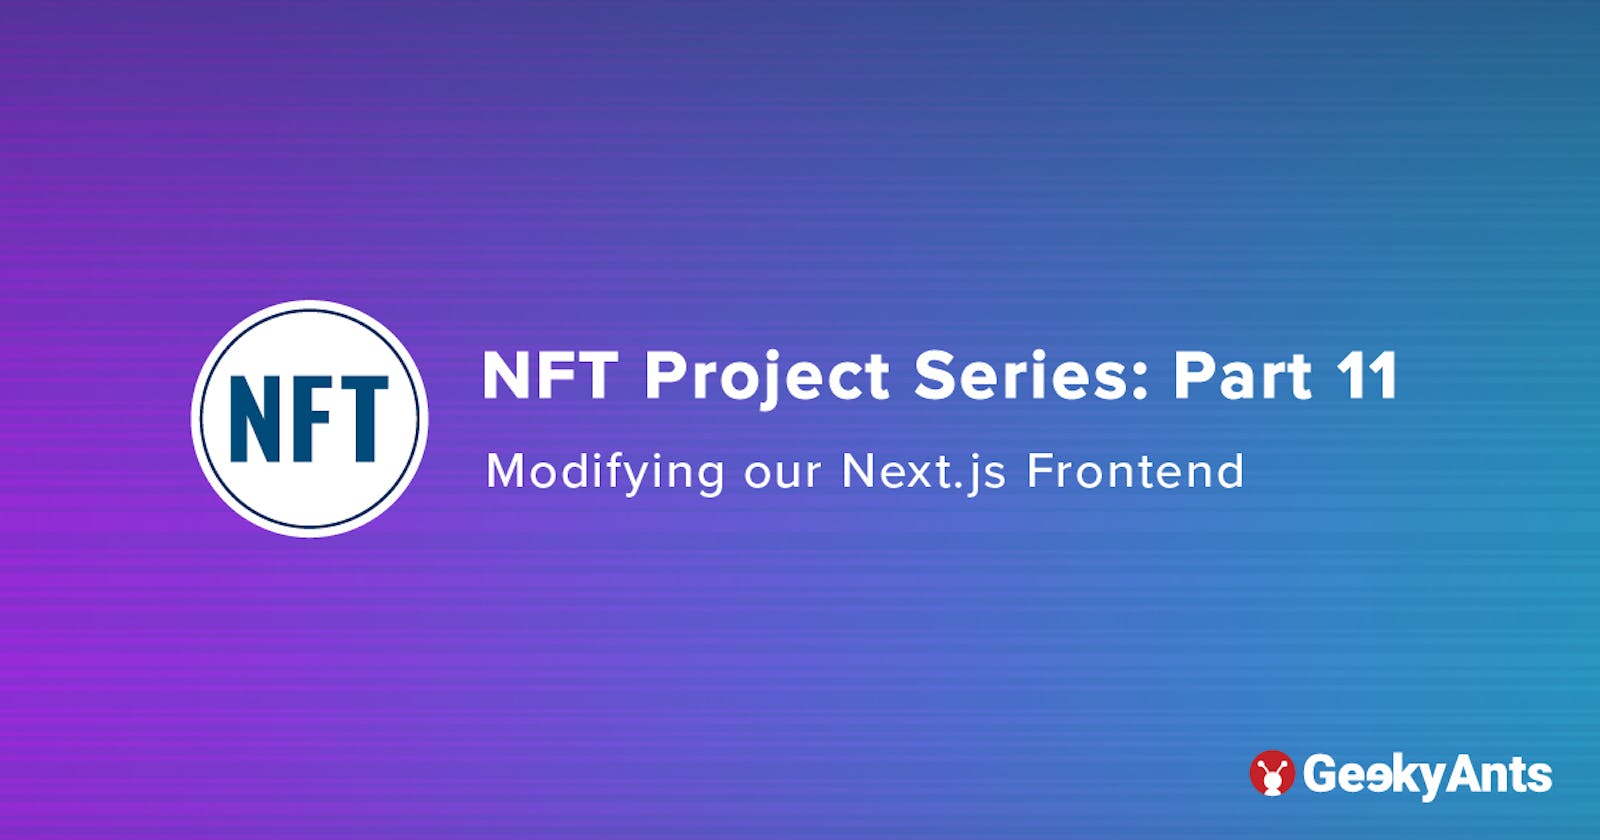 NFT Project Series Part 11: Modifying our Next.js Frontend